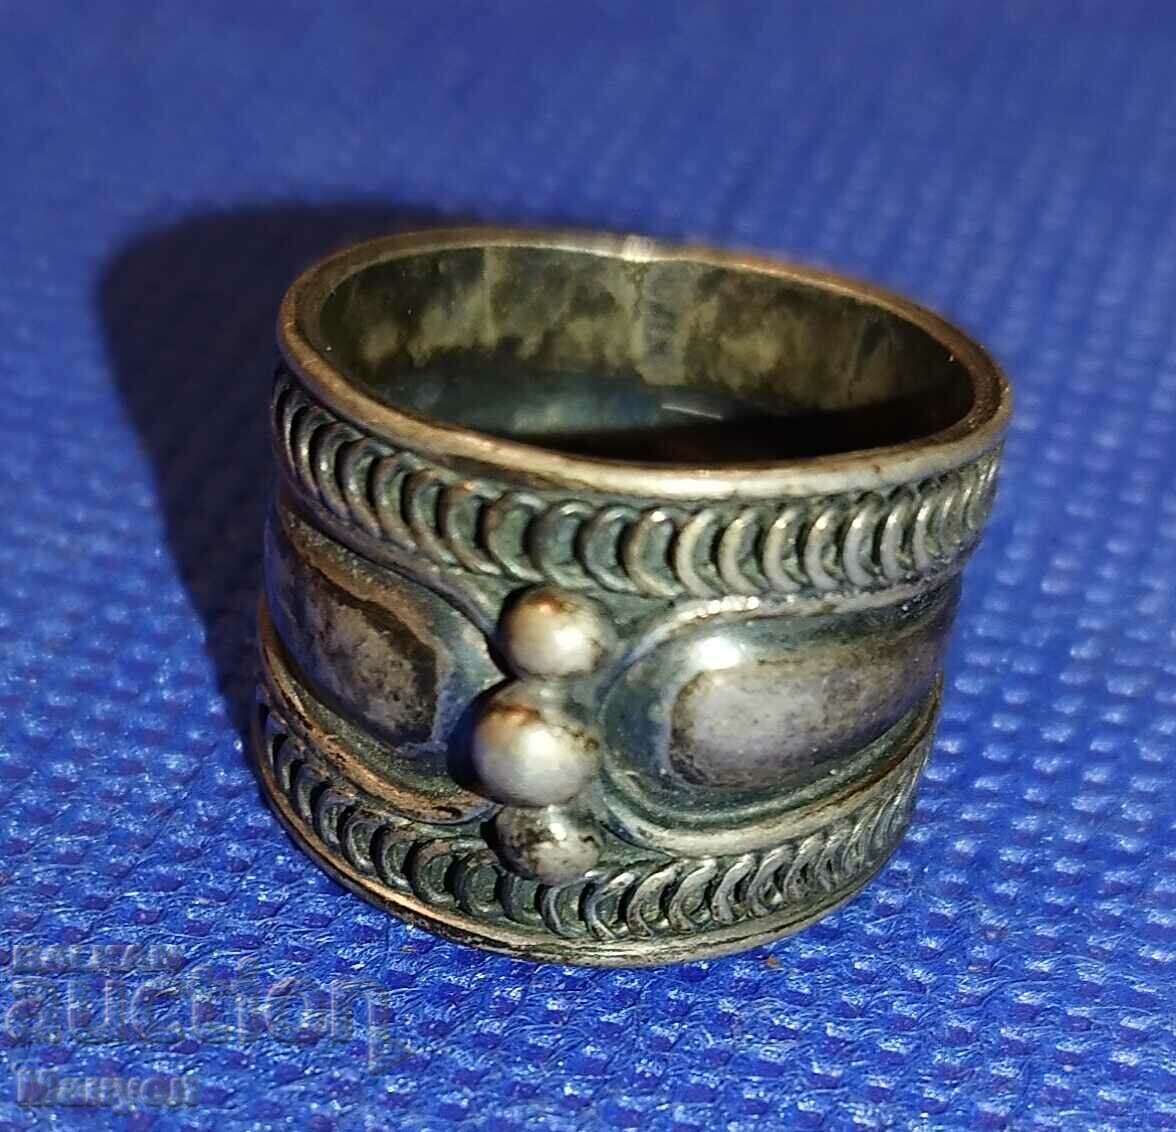 Un inel vechi de argint.